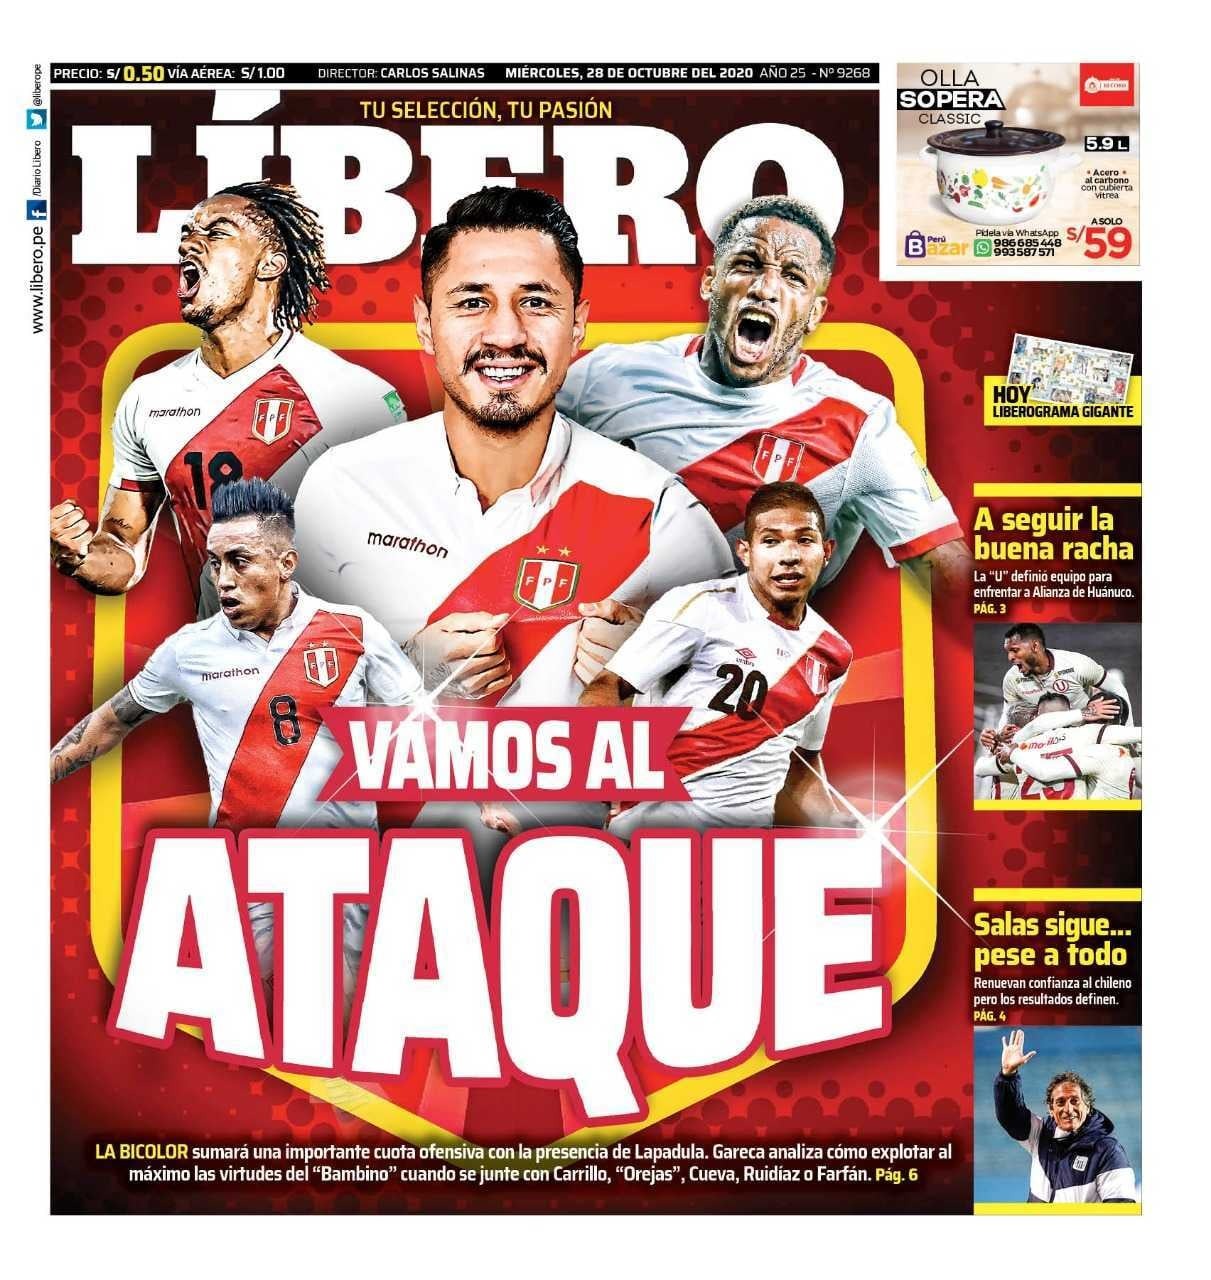 Lapadula sigue acaparando portadas en diarios deportivos peruanos.